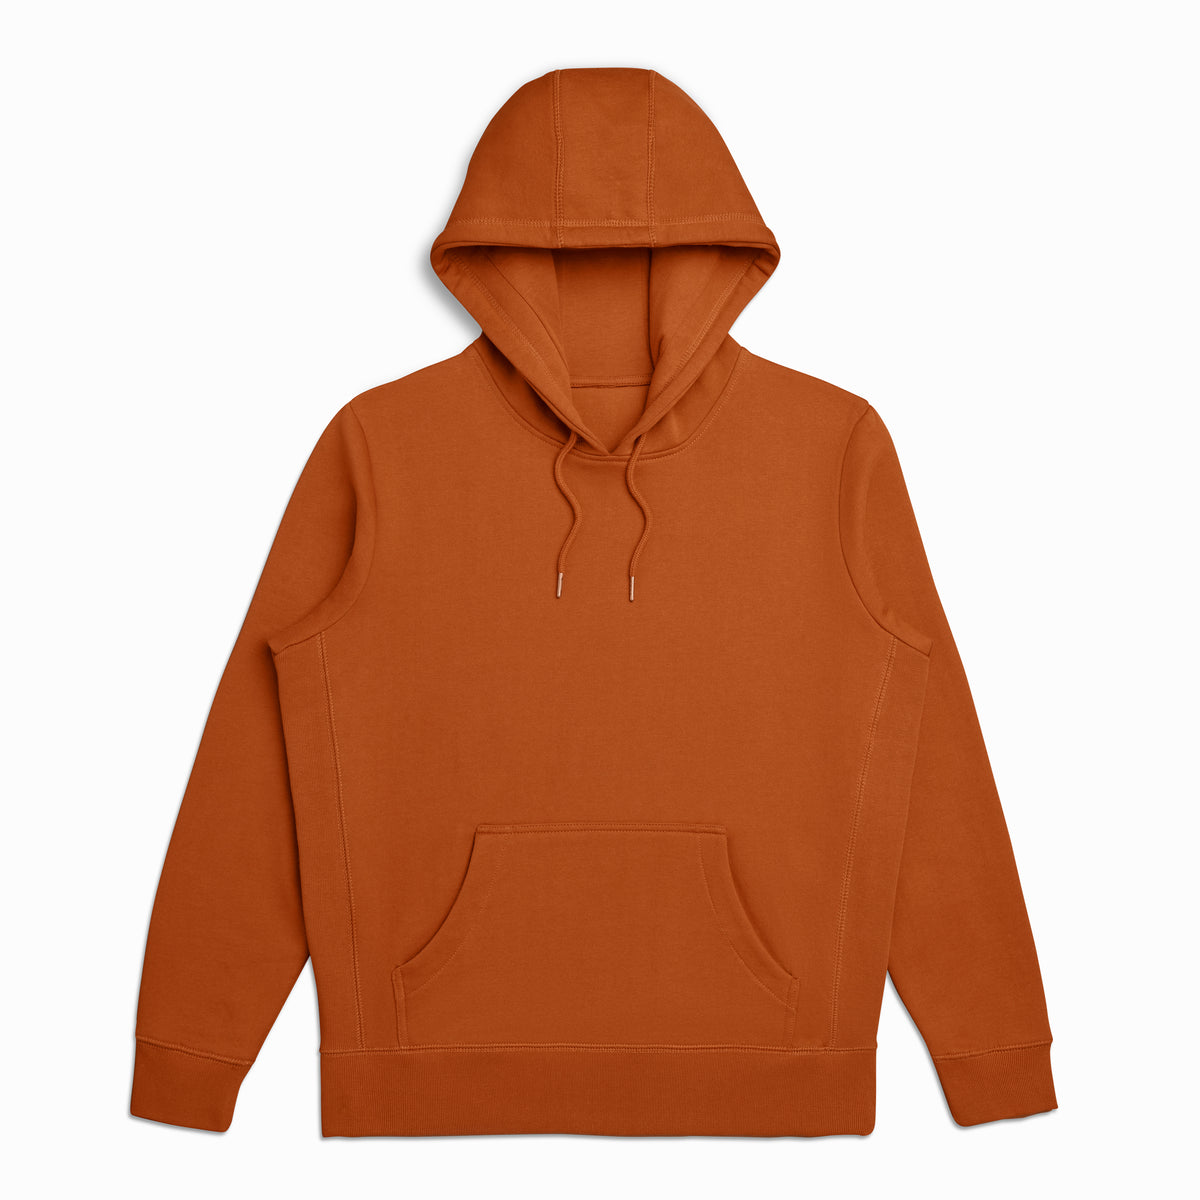 ULTRA-SOFT 360G FLEECE PURE COLOR COTTON HOODIE  Cotton hoodie, Colorful  hoodies, Basic sweaters